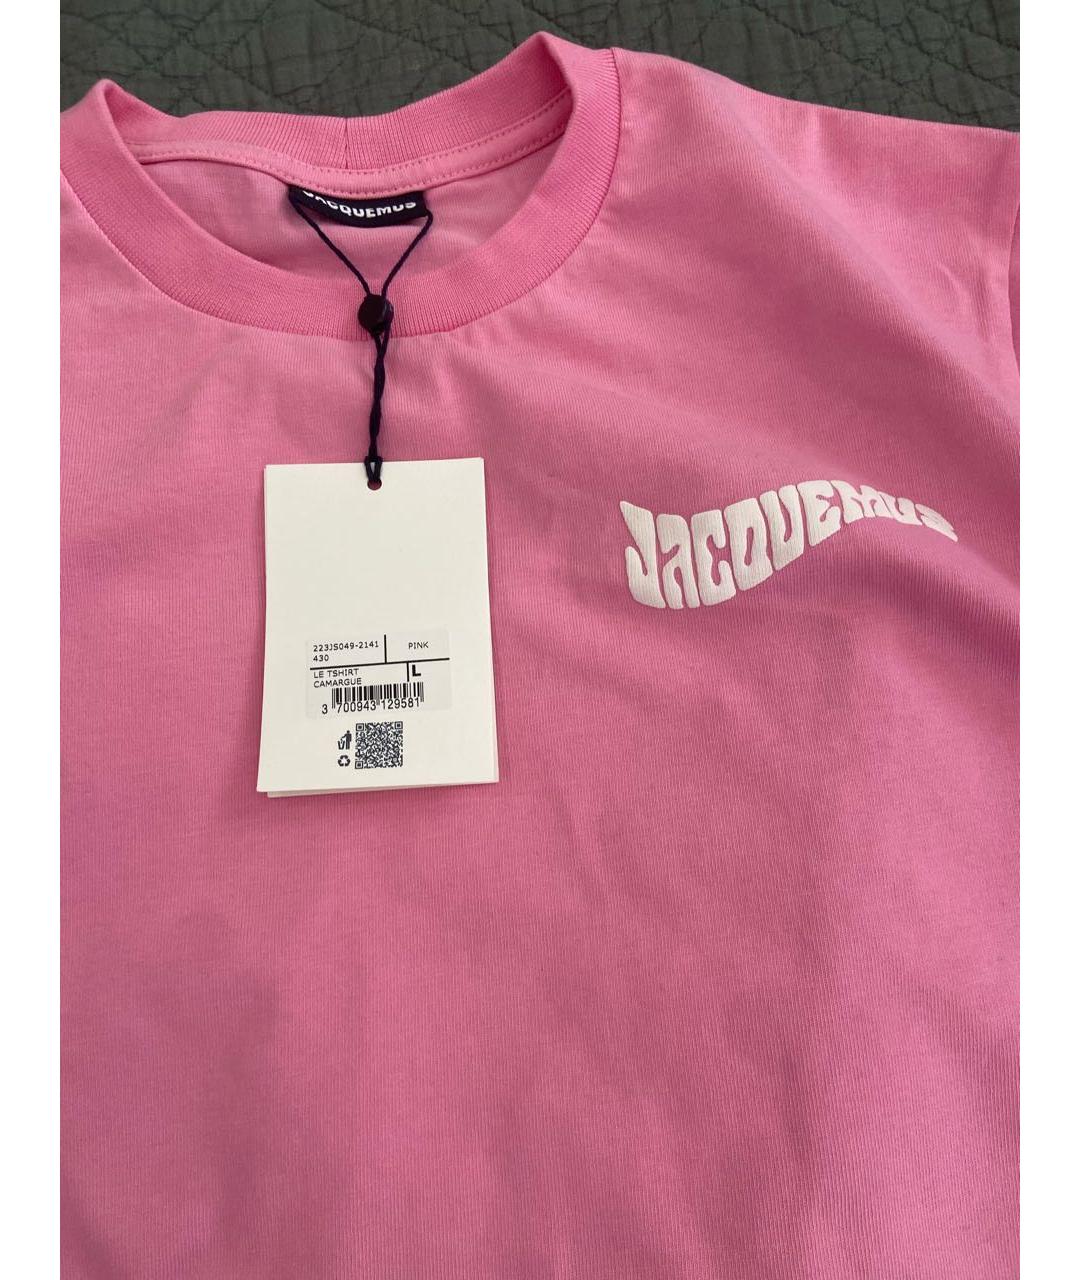 JACQUEMUS Розовая хлопковая футболка, фото 3